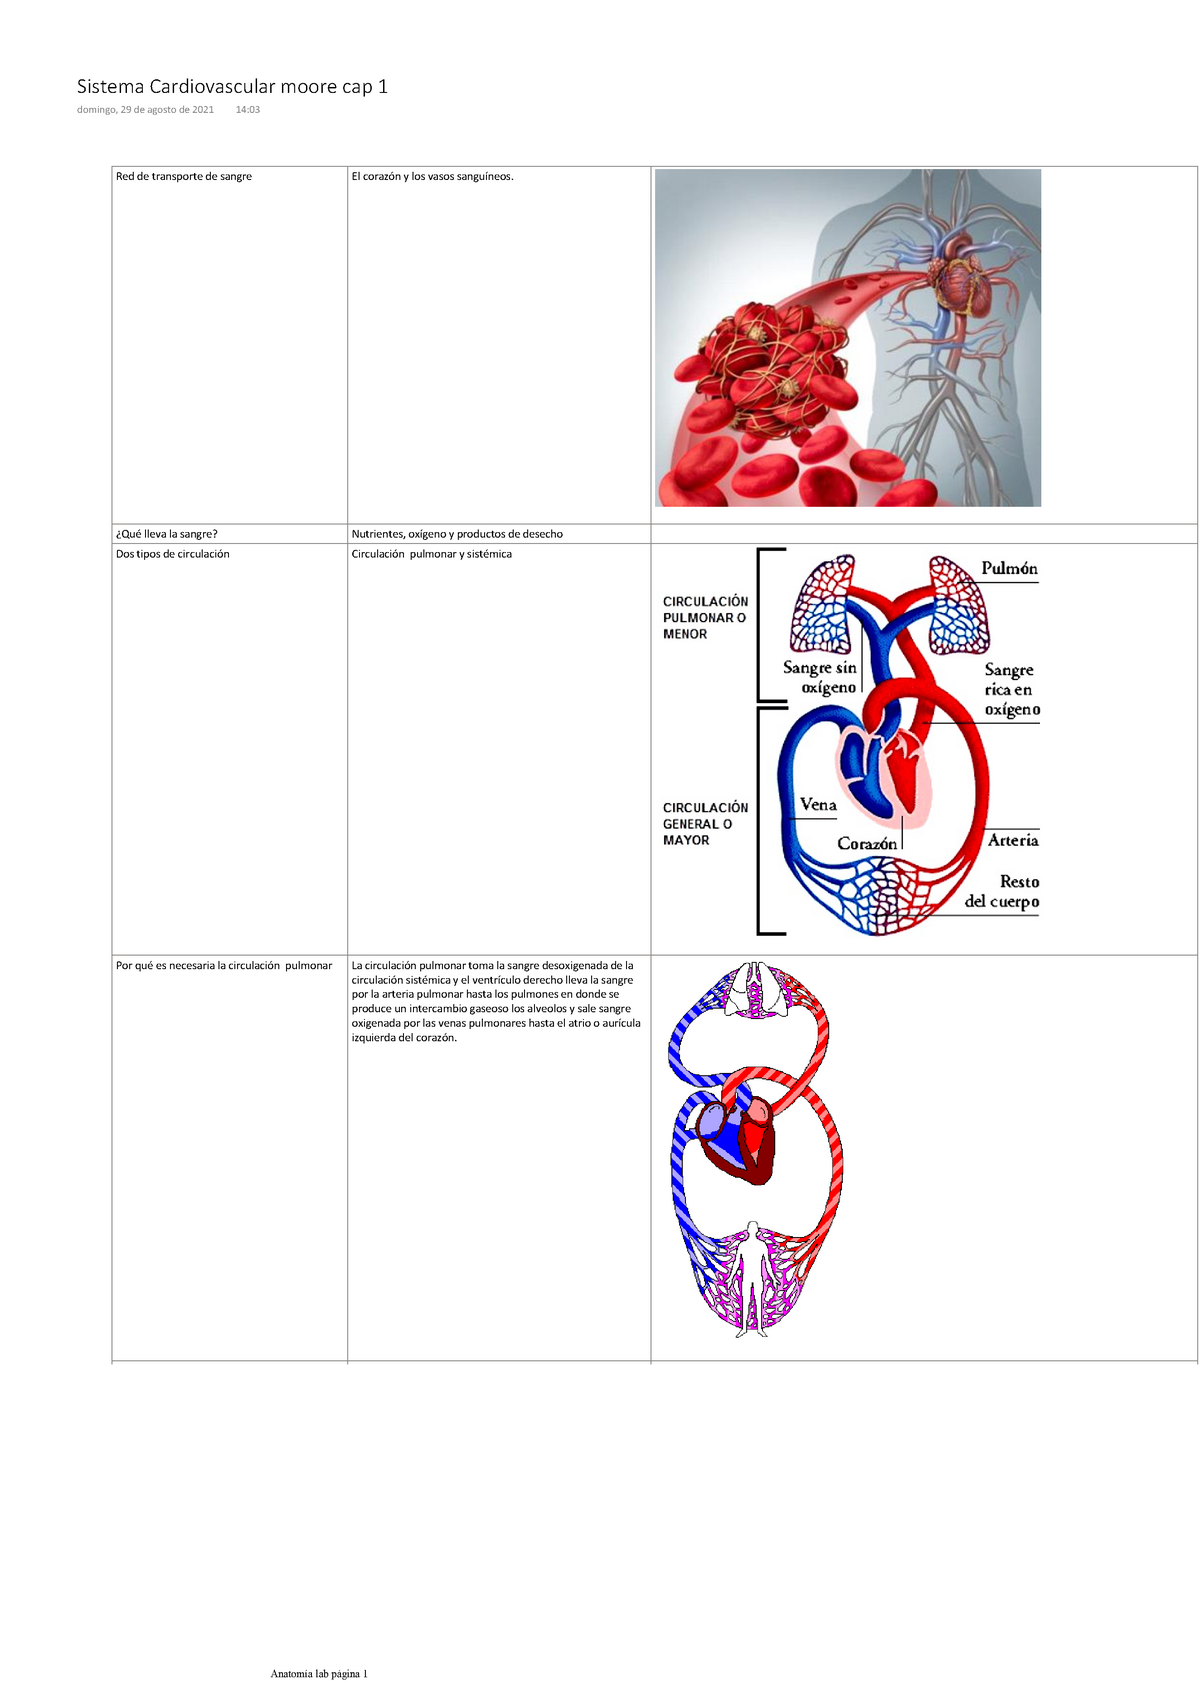 Sistema Cardiovascular moore cap 1 Anatomía UG Studocu